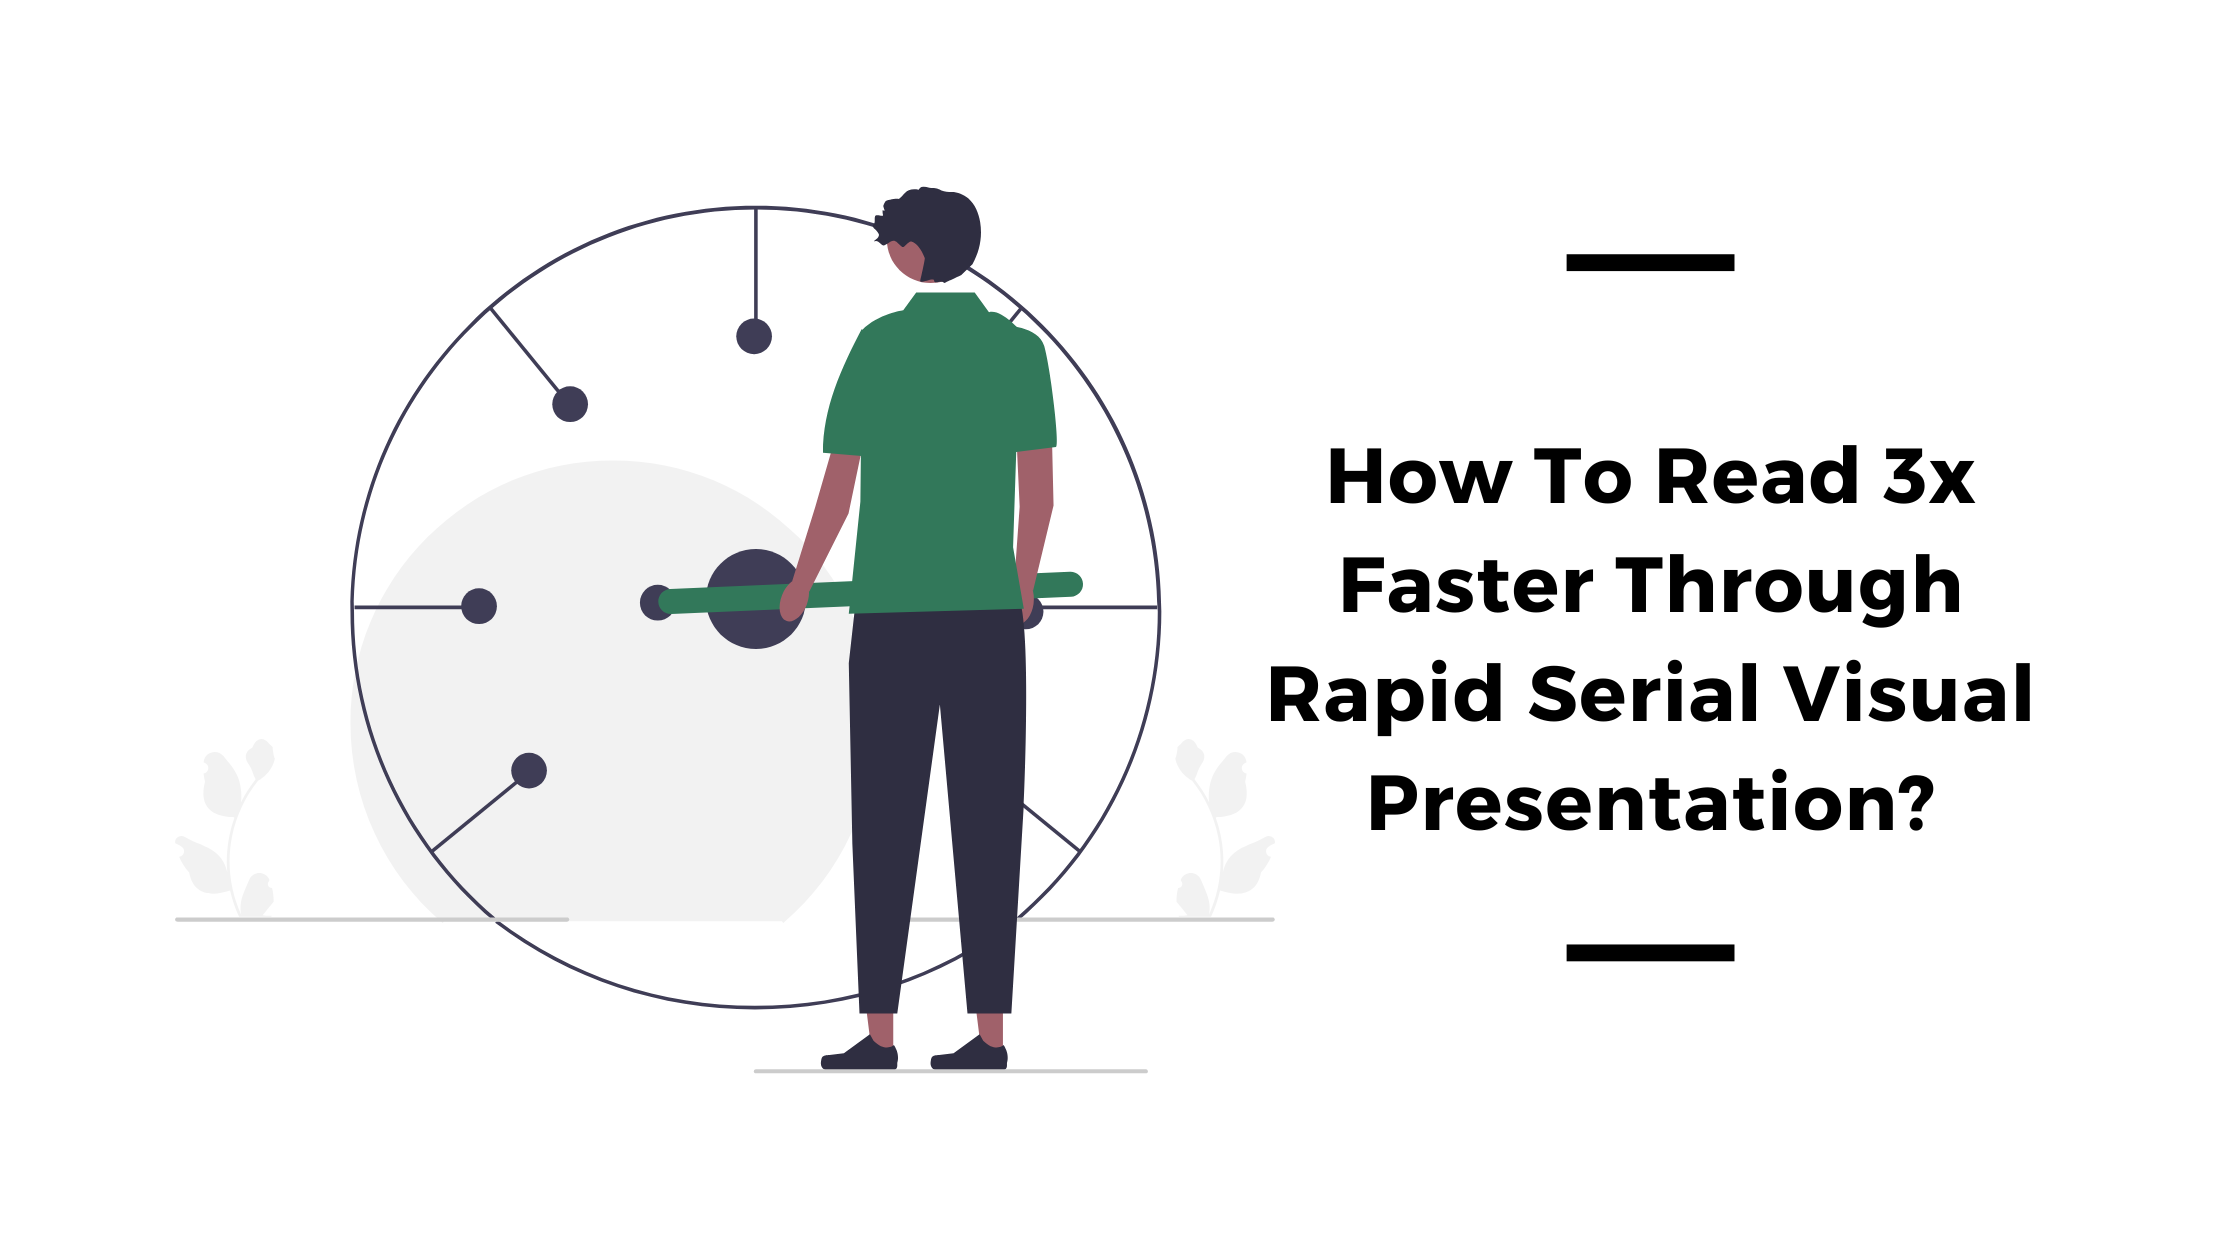 rapid serial visual presentation paradigm is a method of